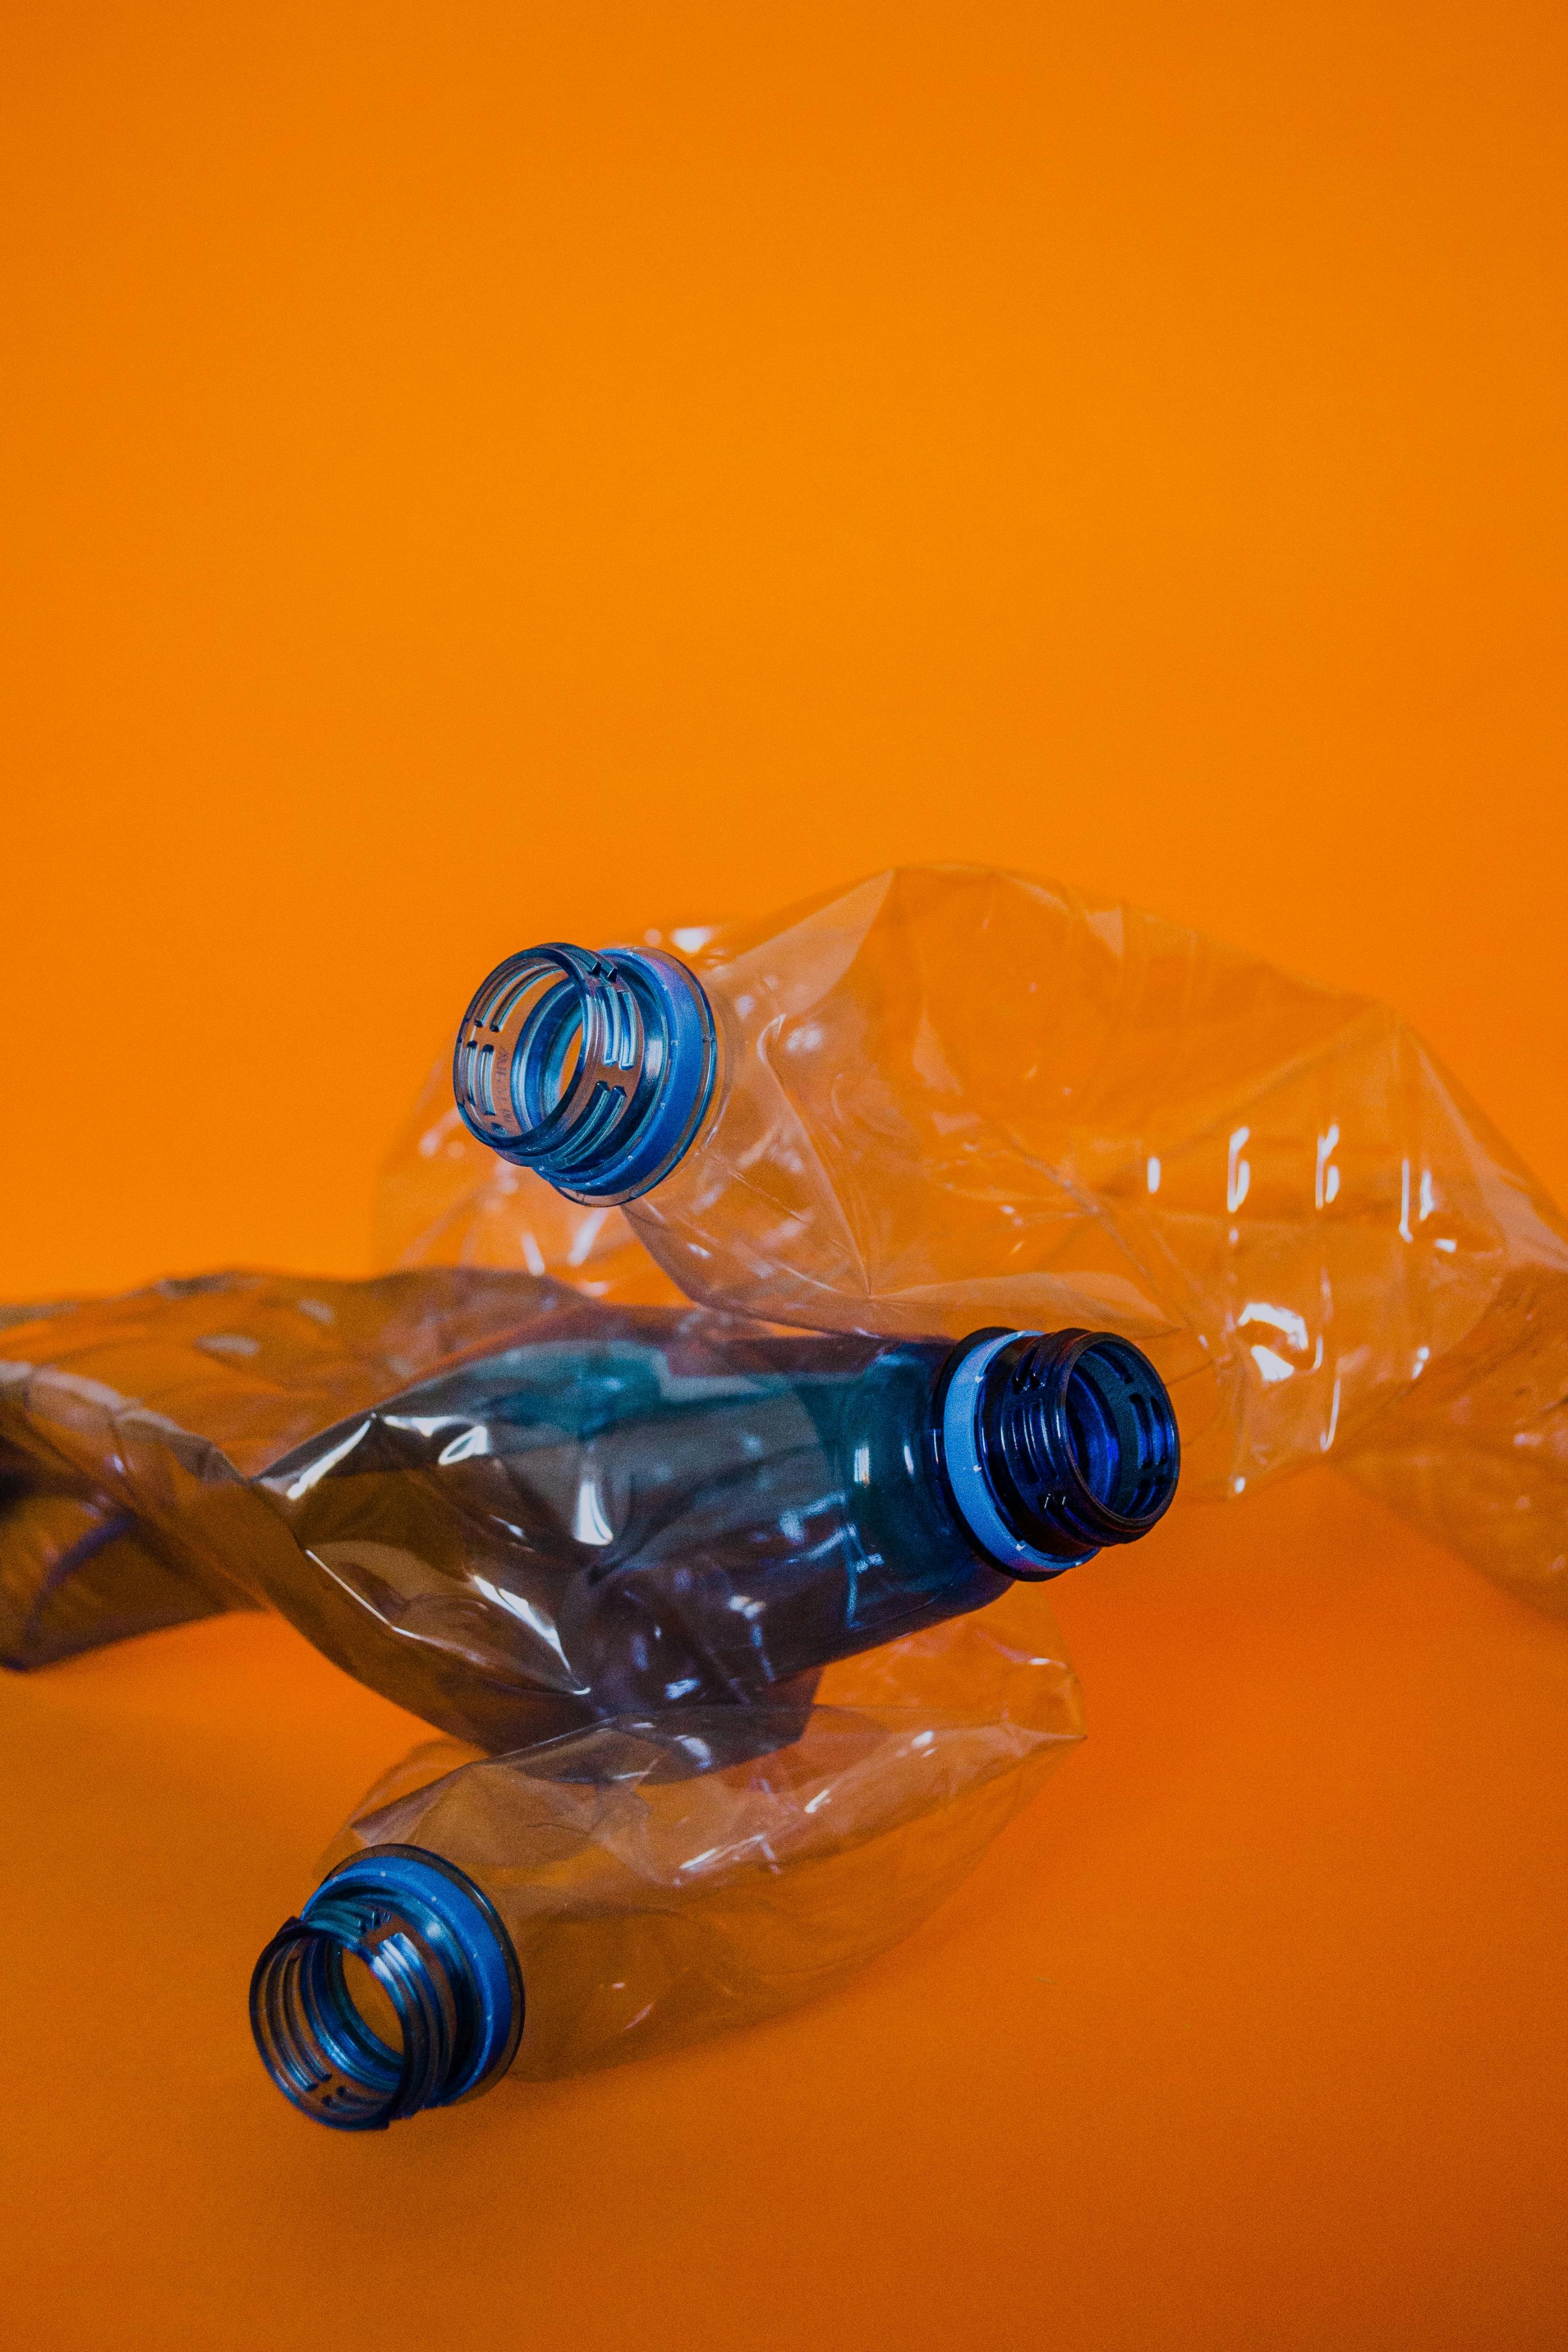 Photograph of empty plastic bottles